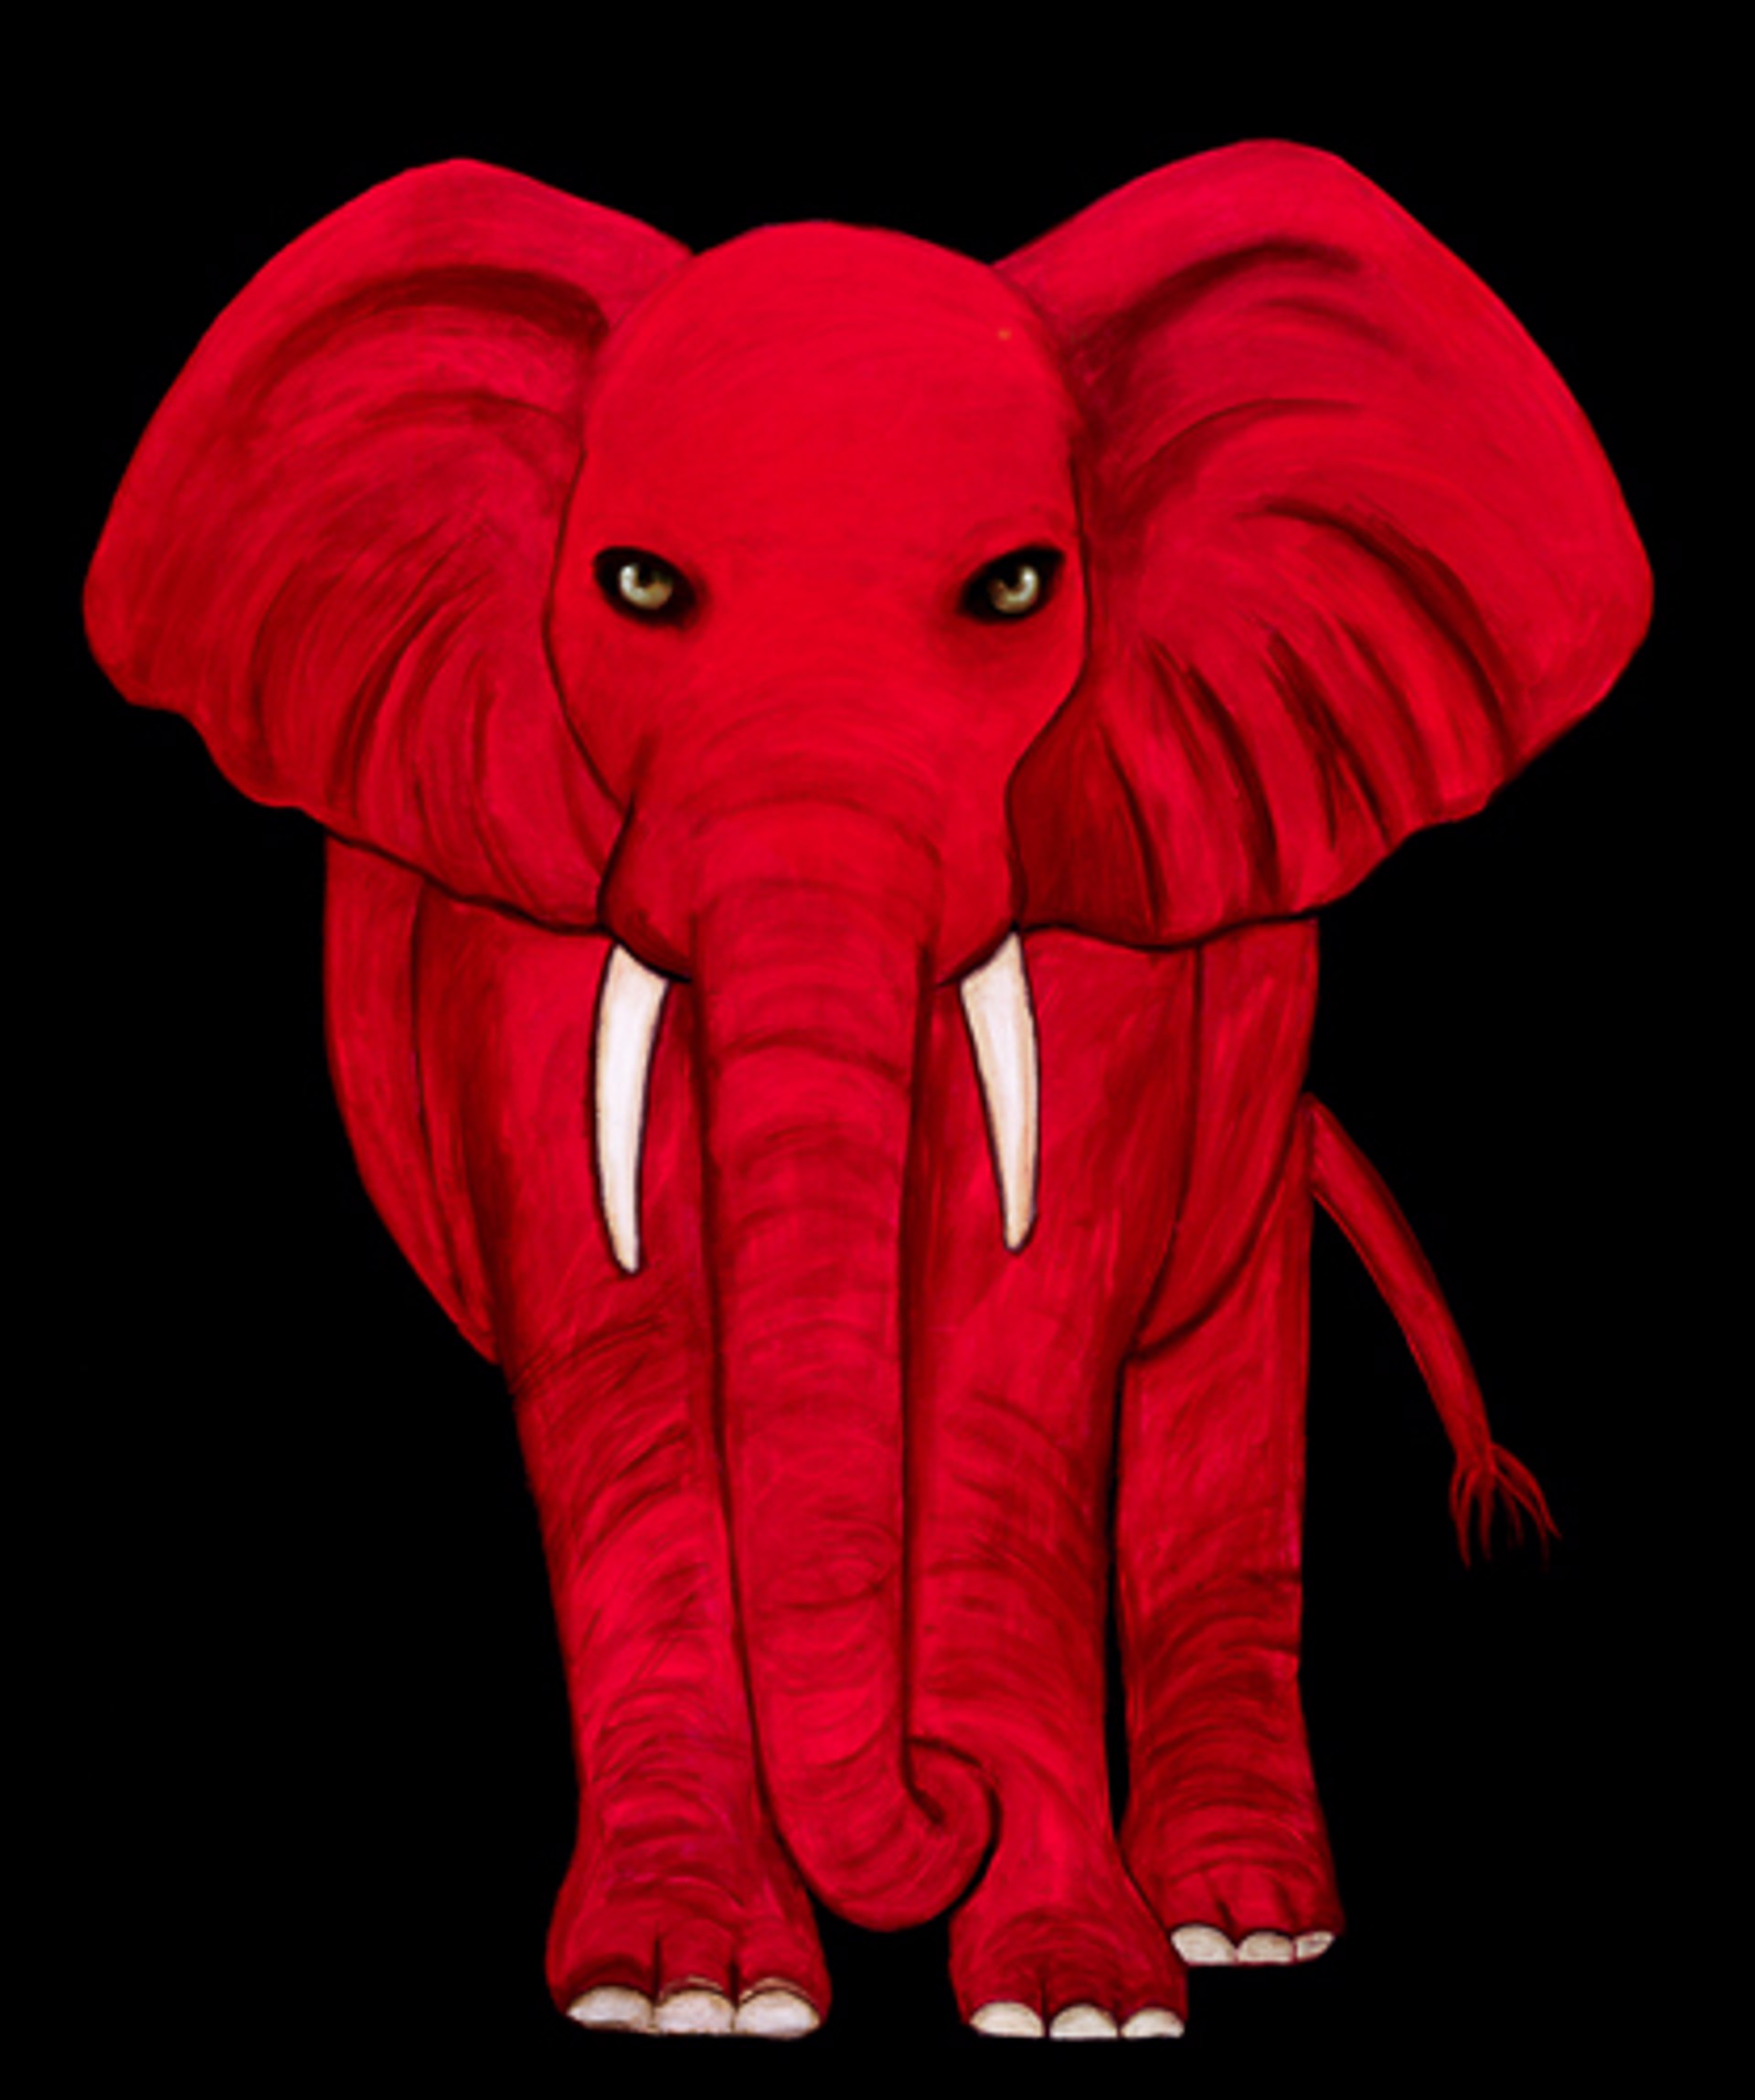 Red Elephant by Carole LaRoche